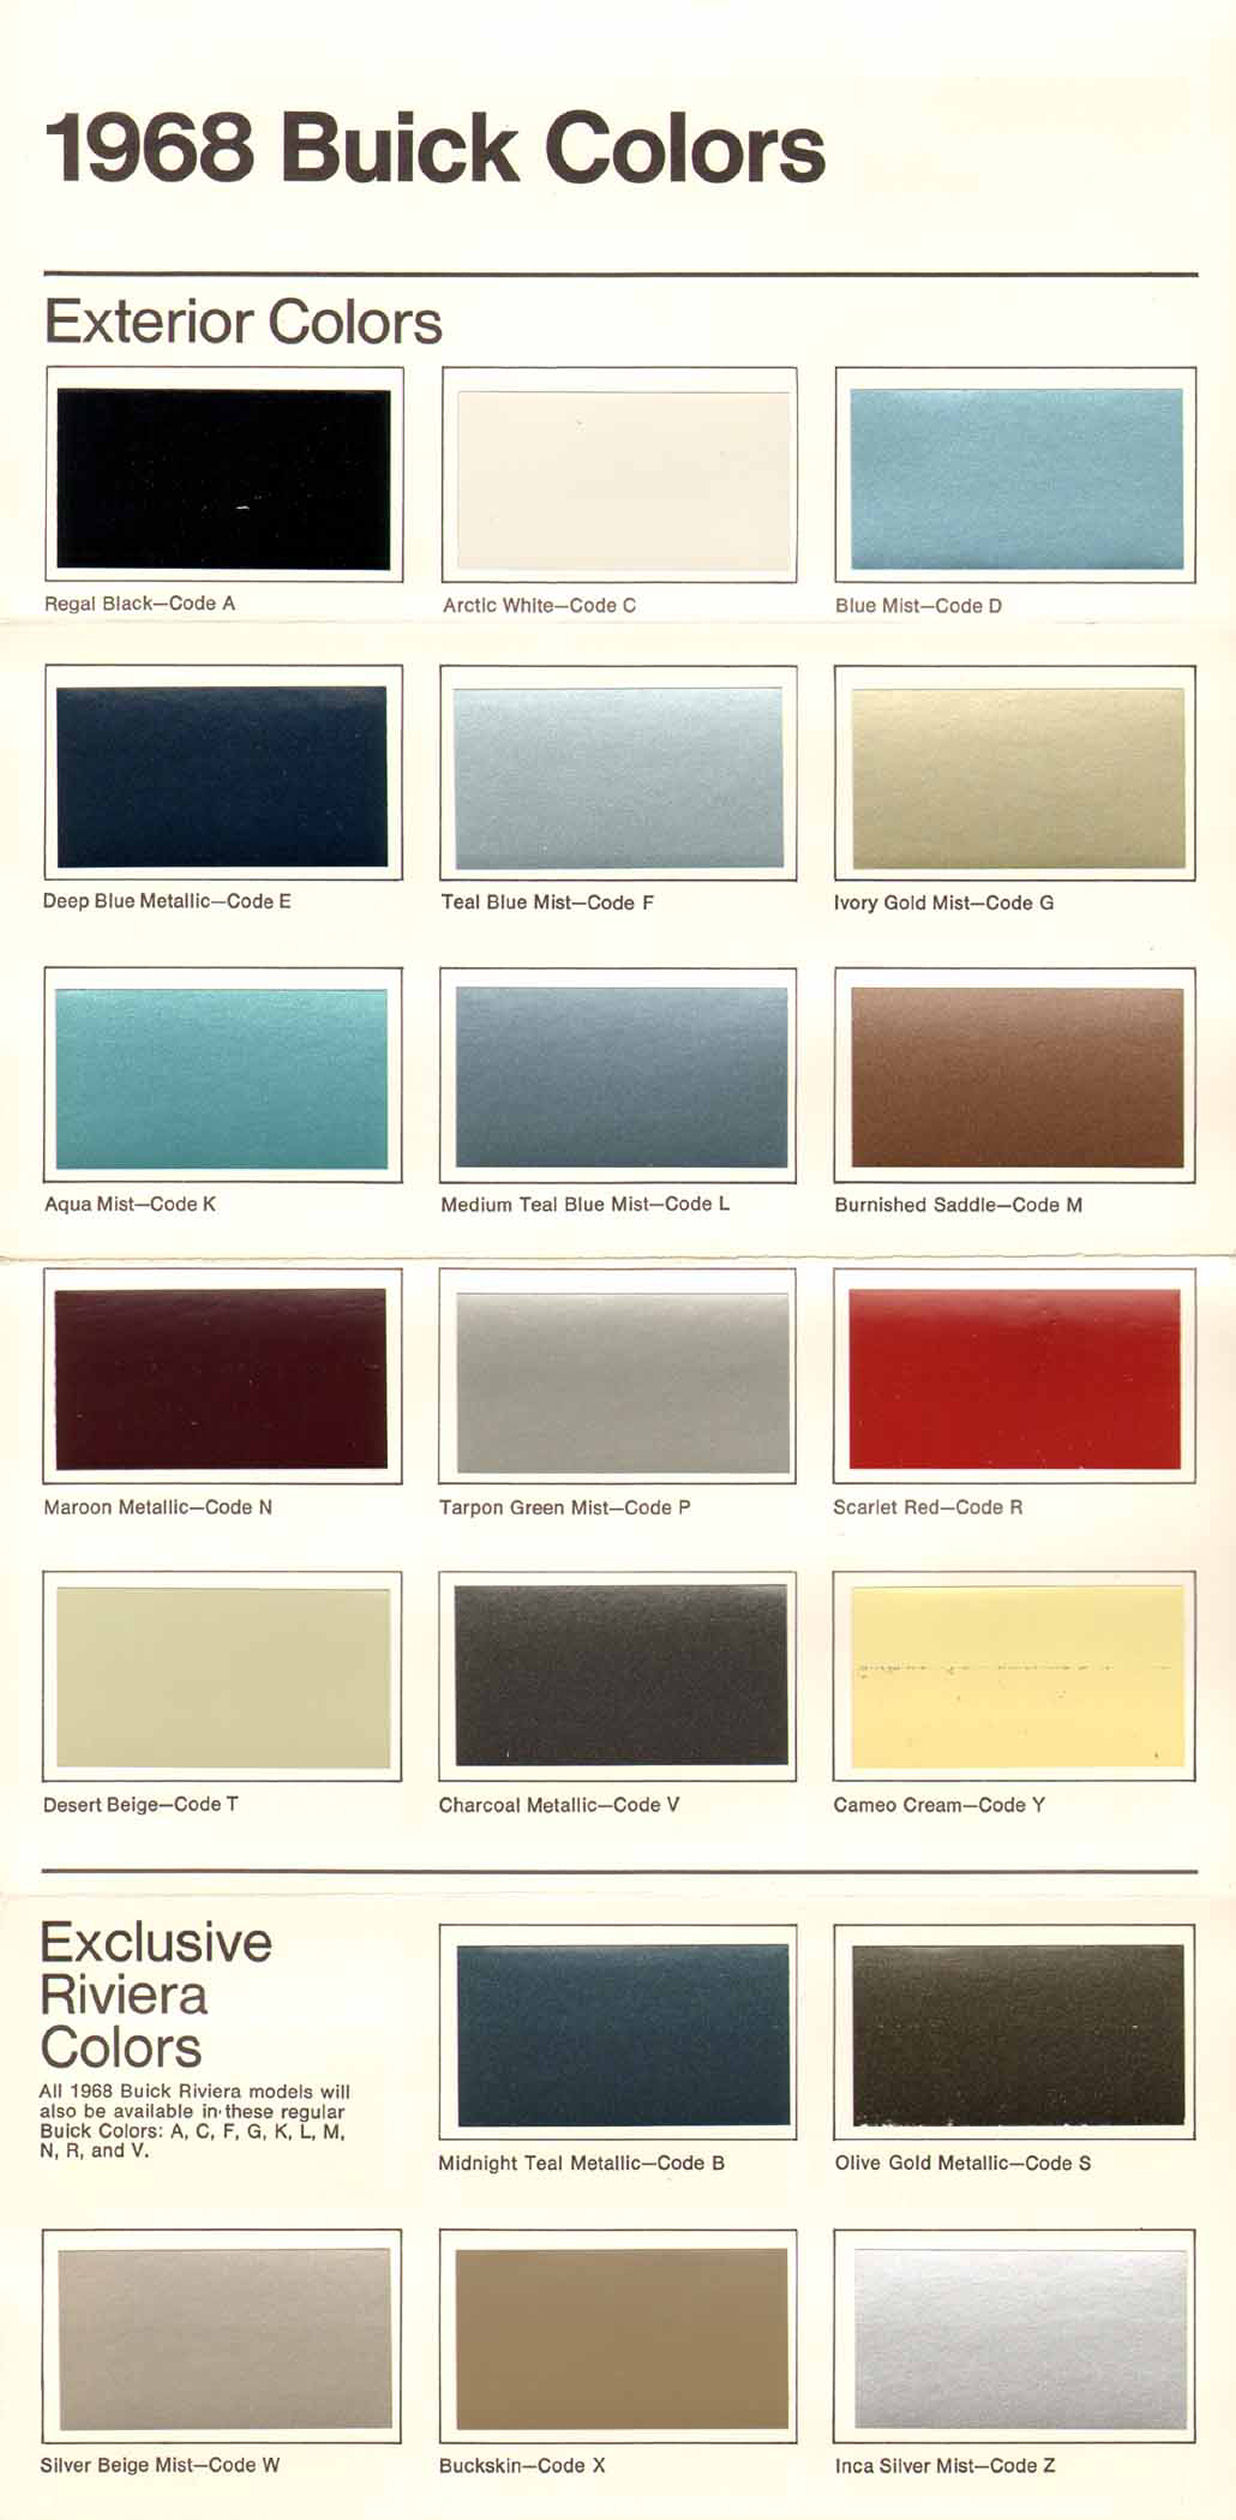 1968 Buick Exterior Colors Chart-02-05